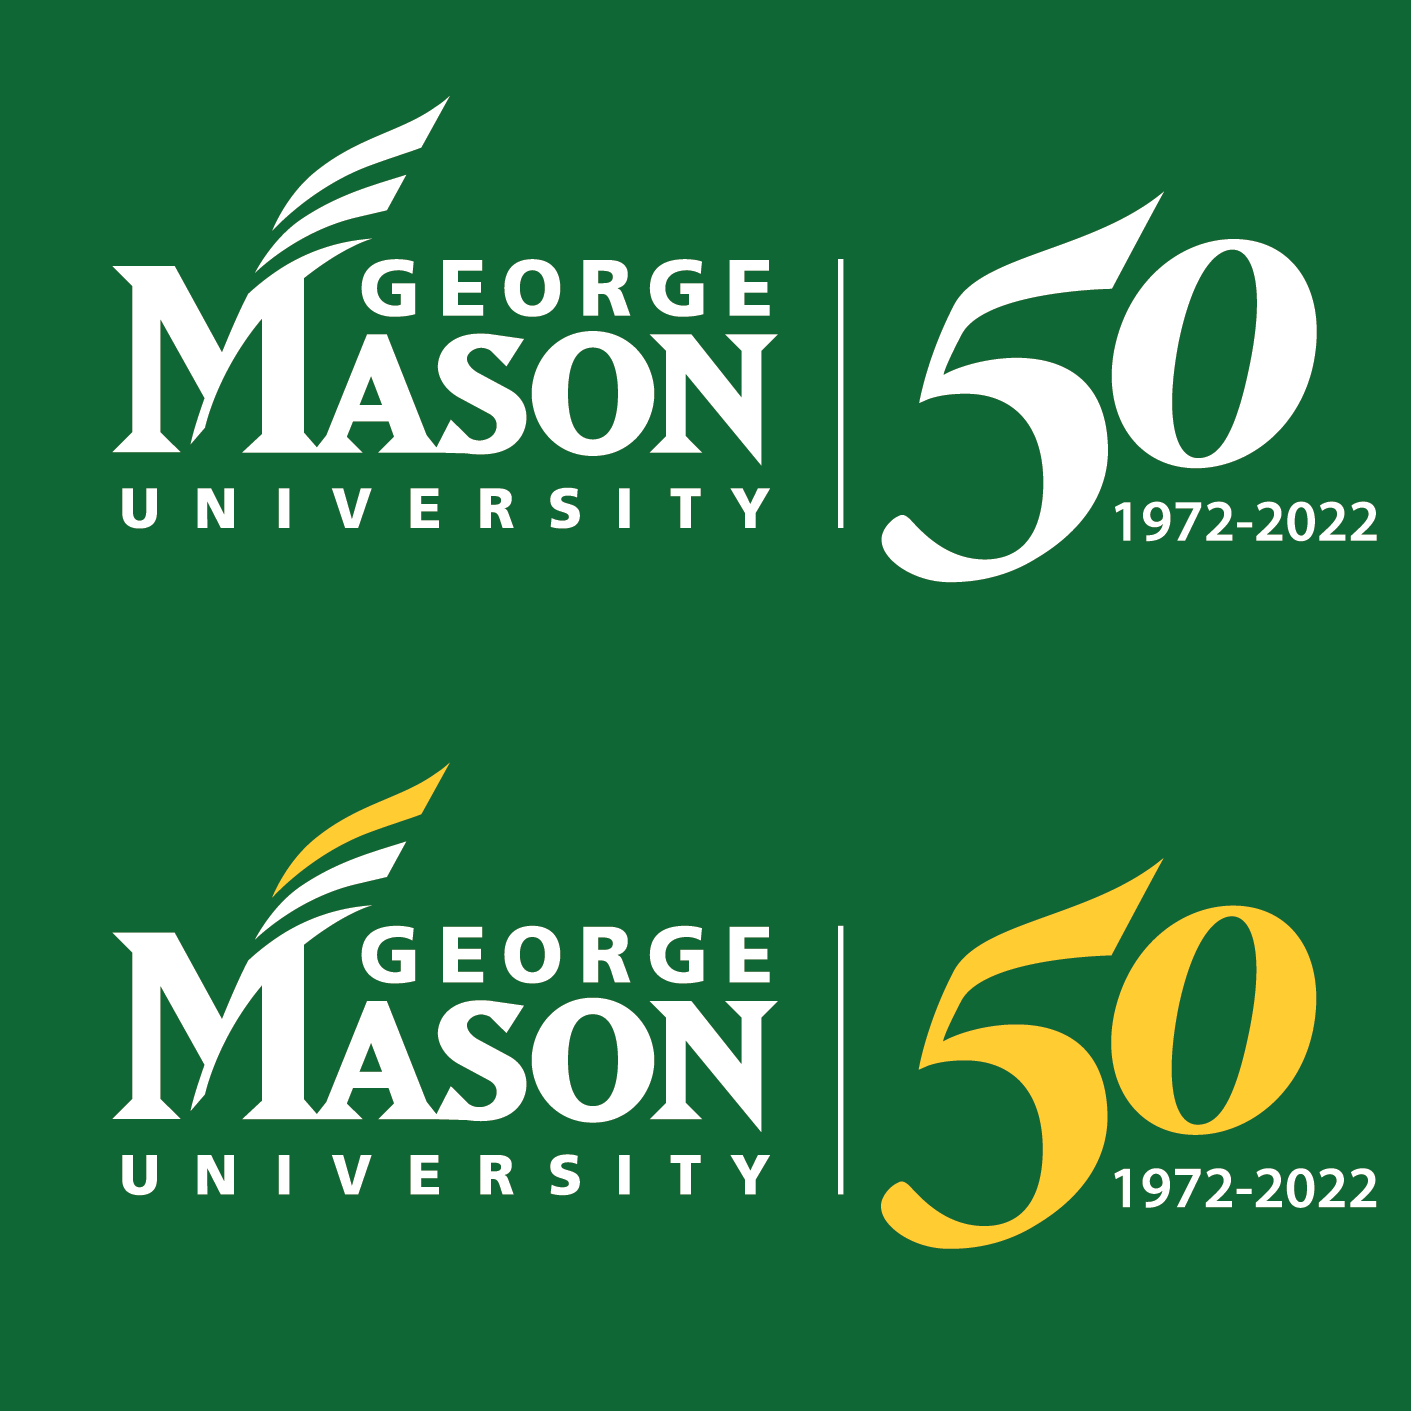 George Mason University's 50th Anniversary 1972-2022